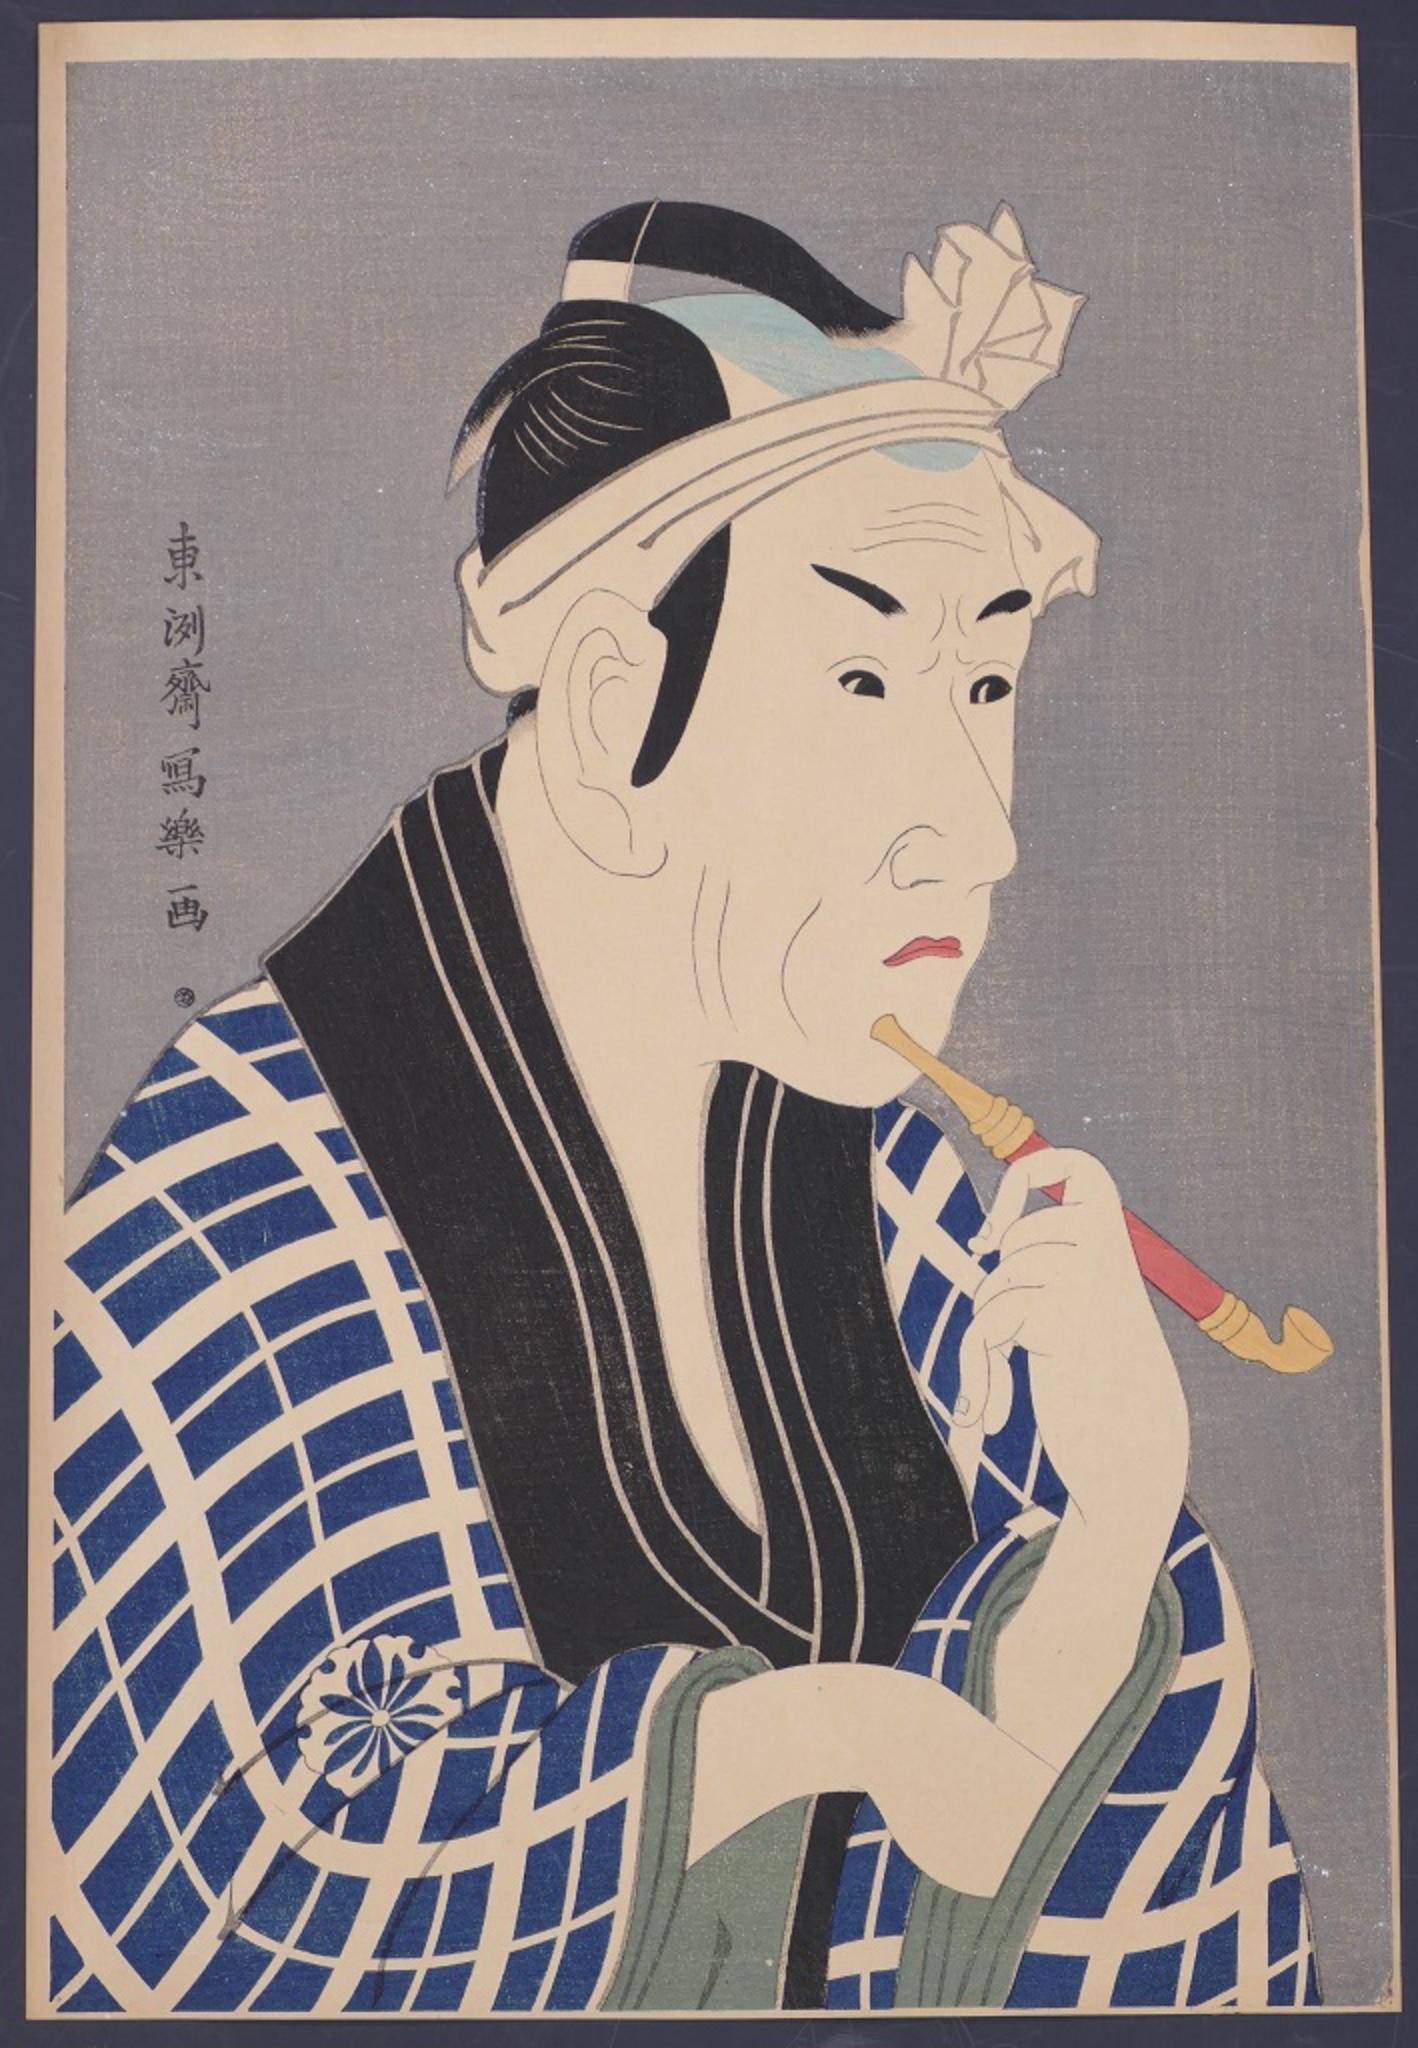 Portrait of Man with a Pipe - Woodcut print after Utagawa Kuniyoshi 